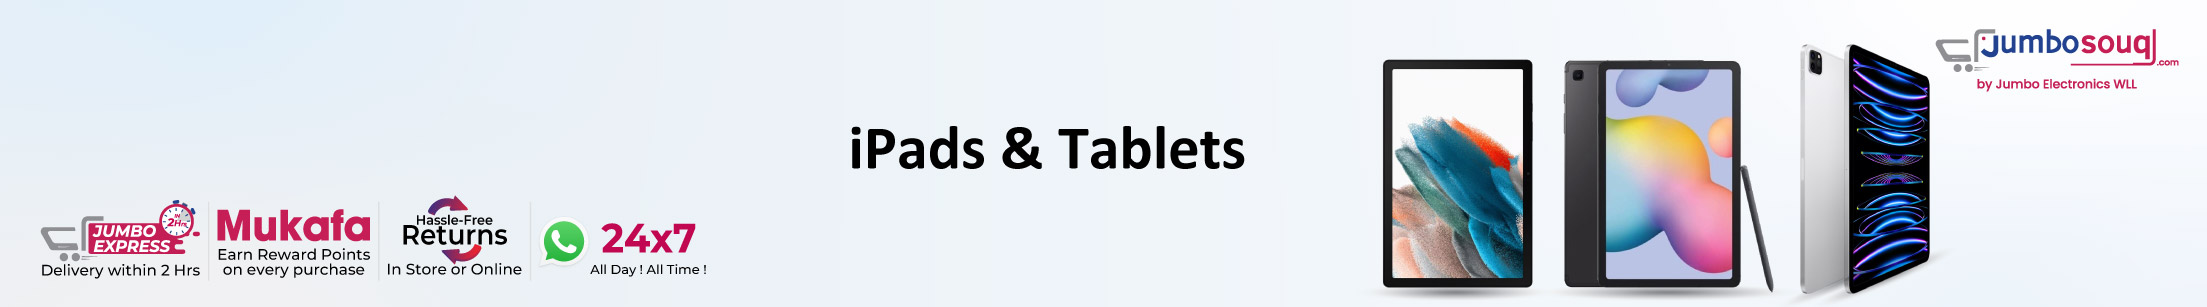 iPads & Tablets